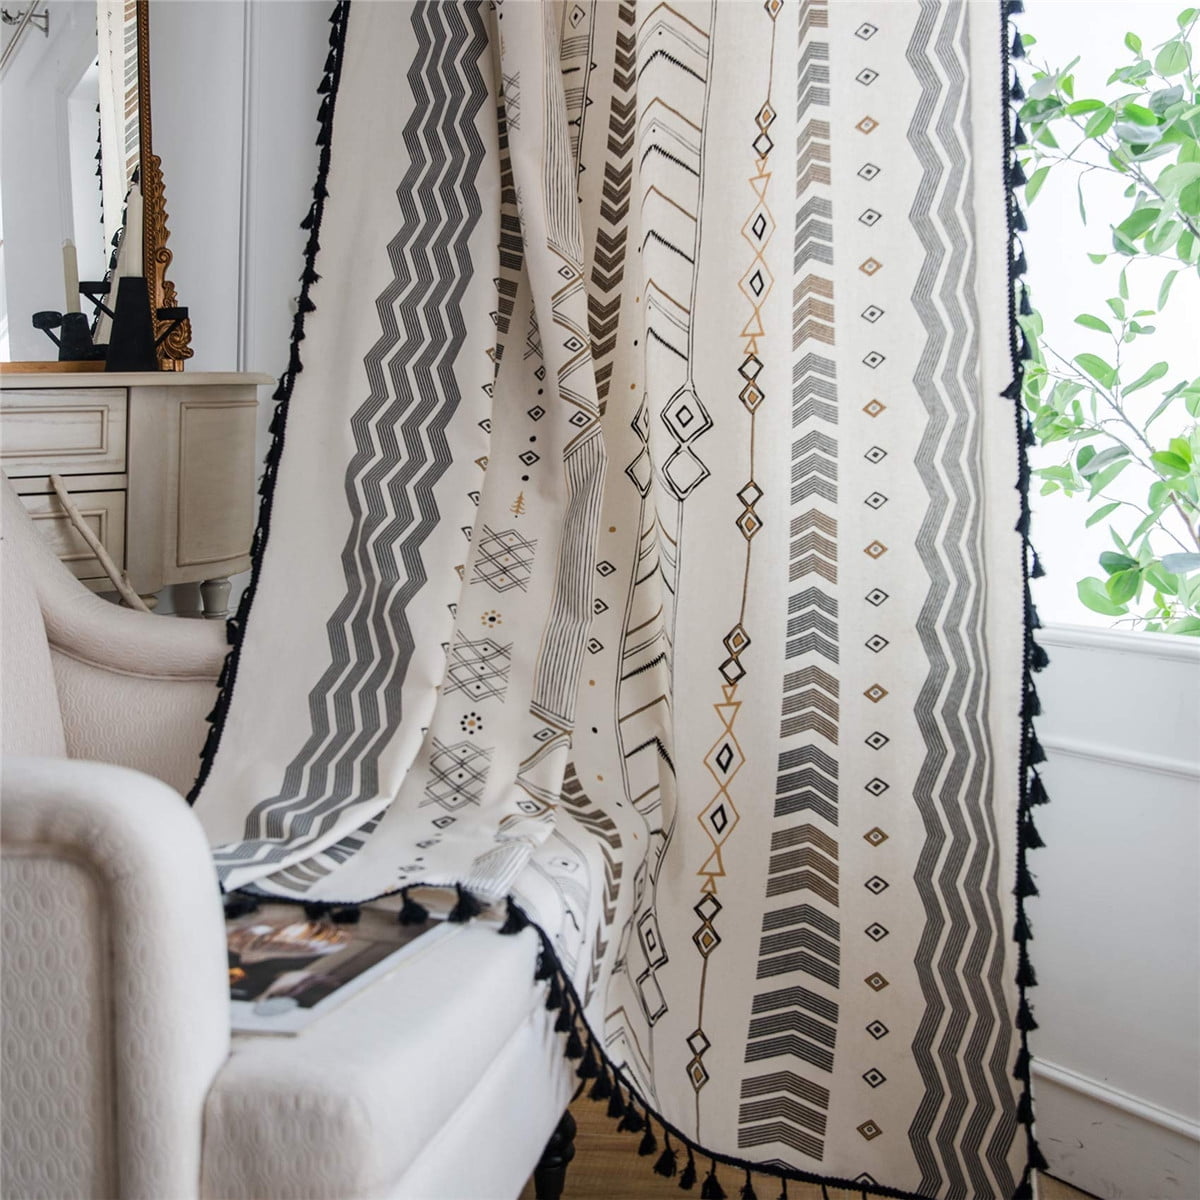 Vintage Curtain For Living Room Tassel Boho Window Drapes Hippie Cotton Linen 